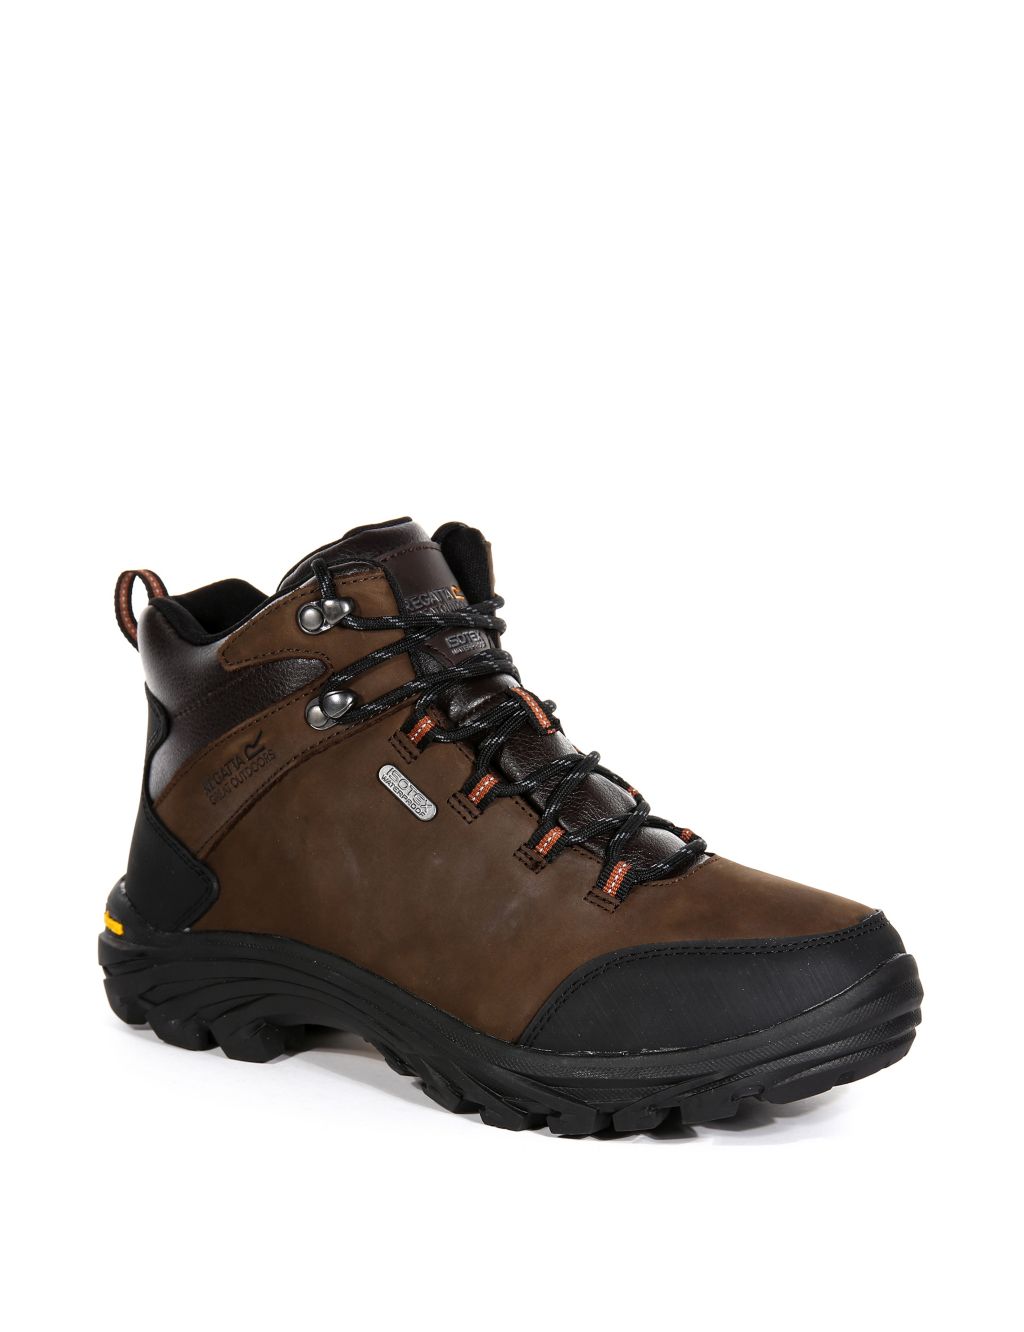 Burrell Leather Waterproof Walking Boots image 2